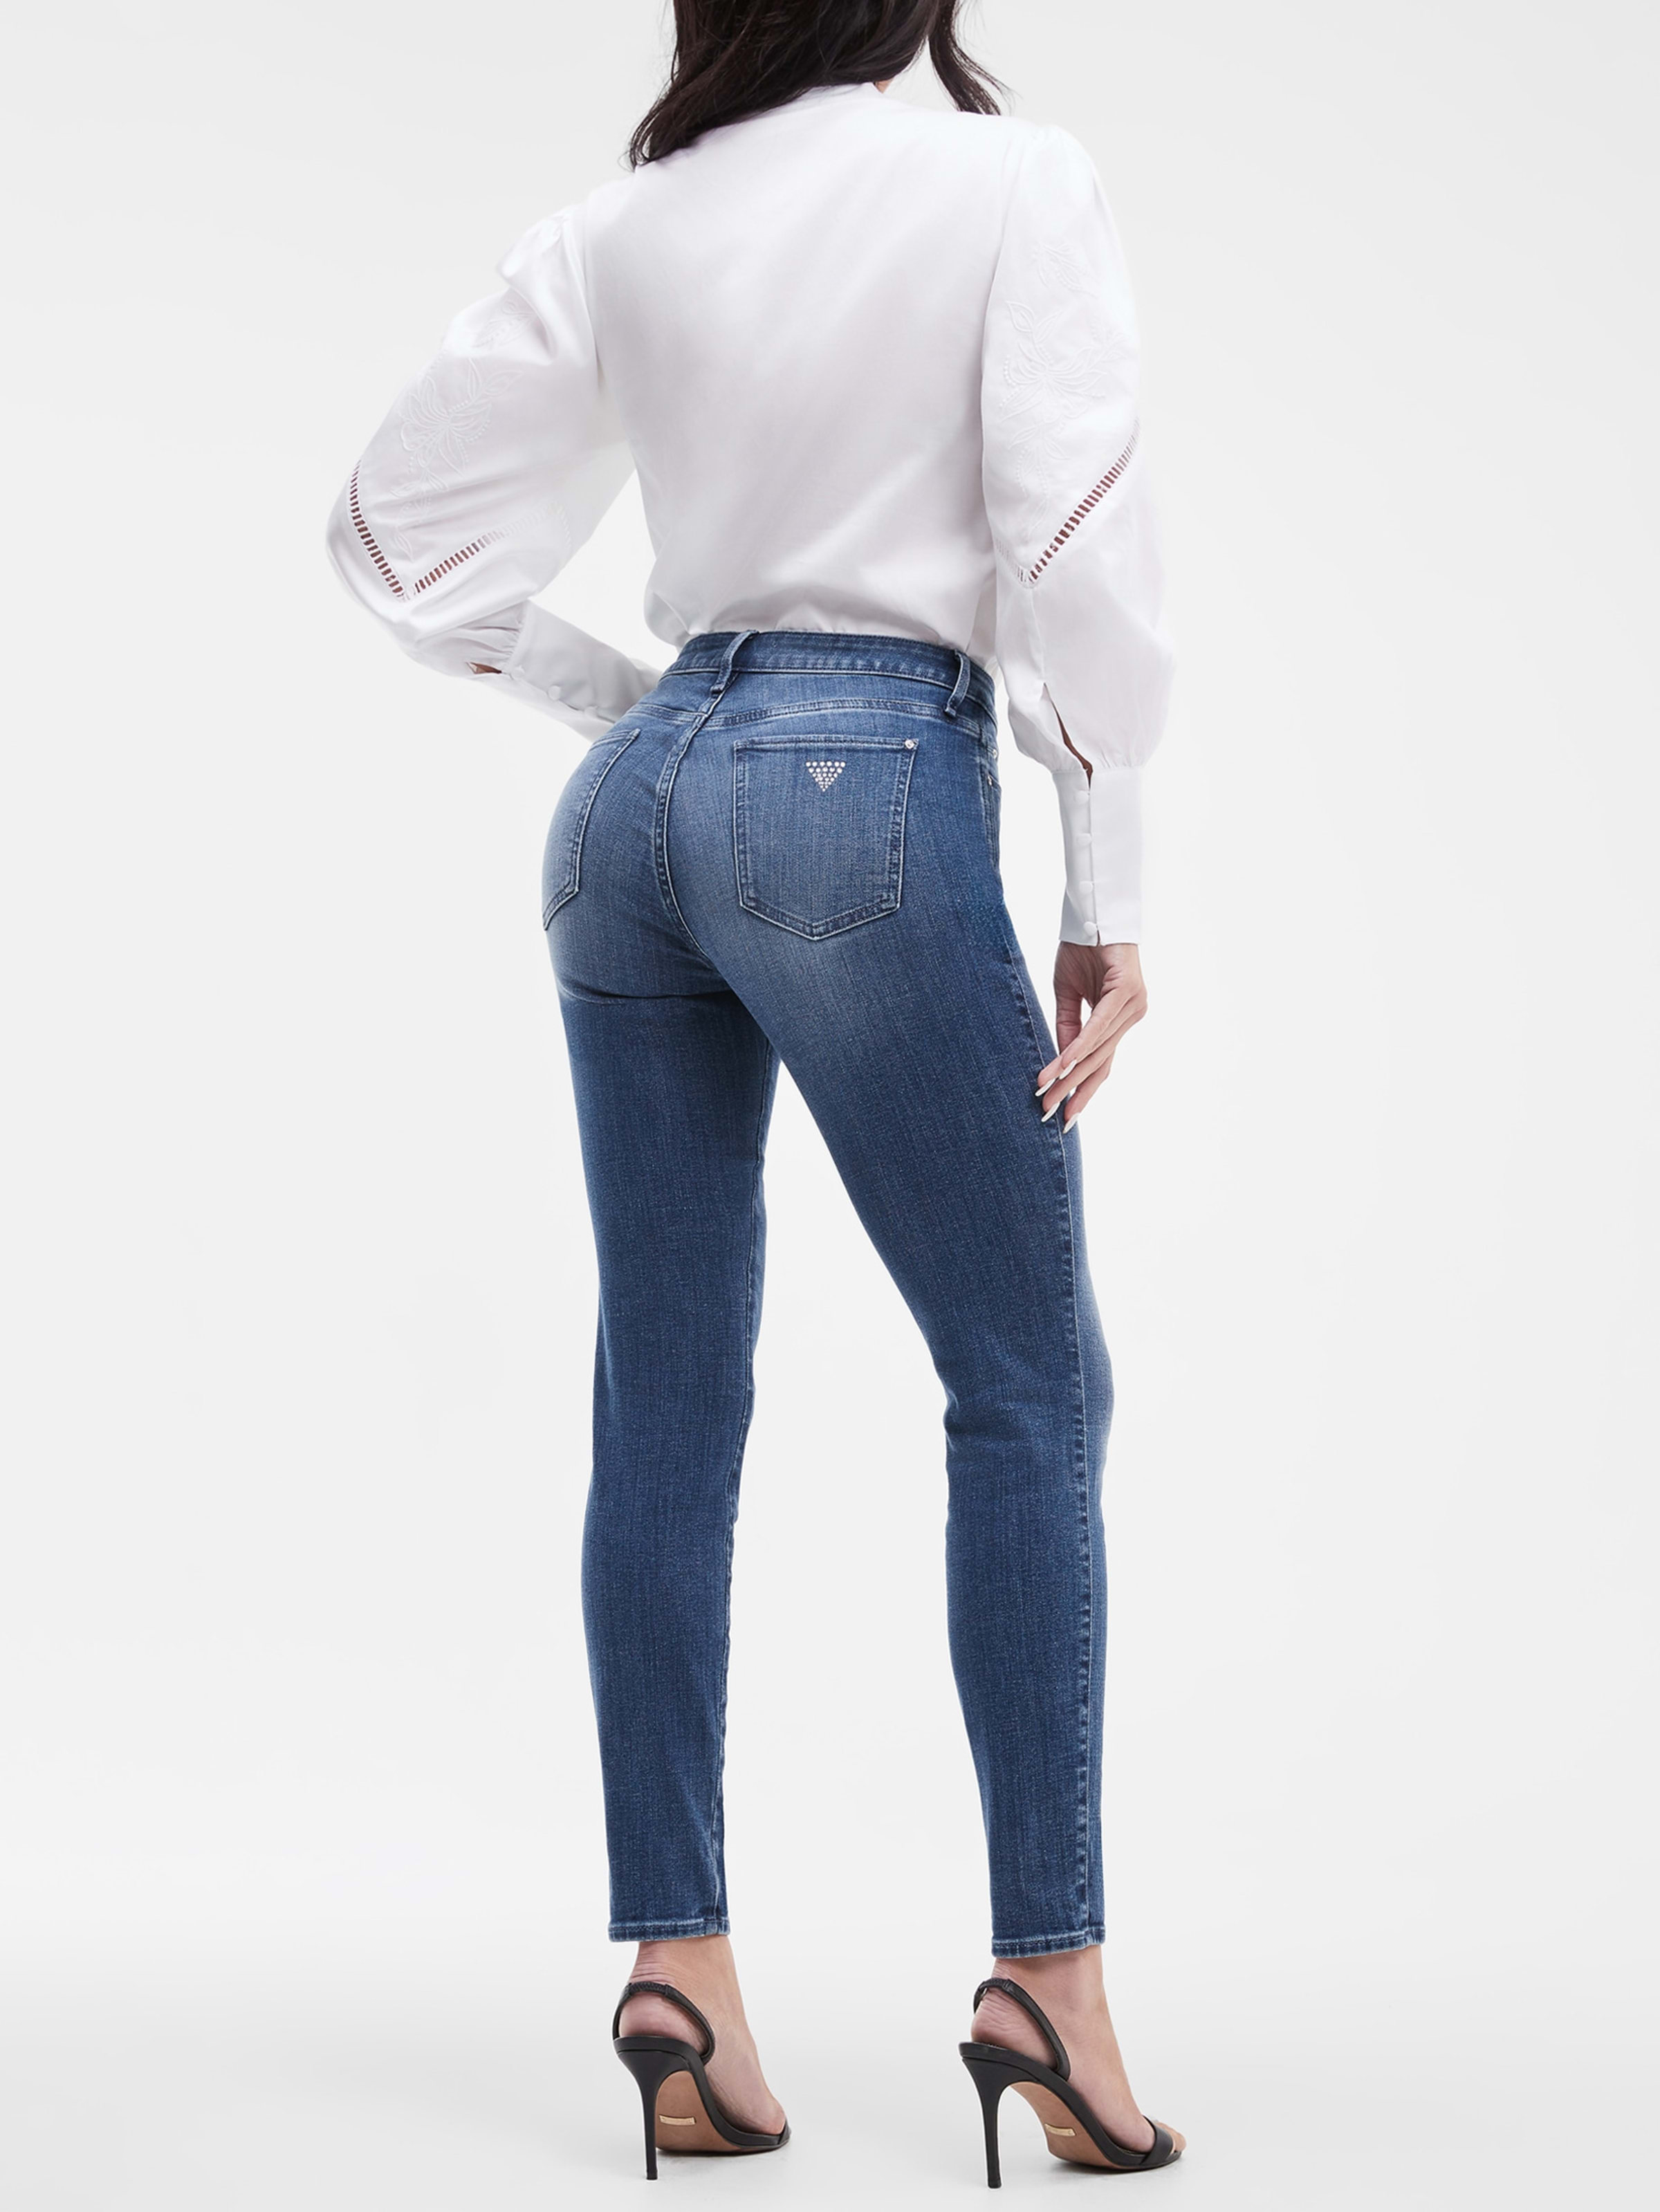 Jeans Skinny para Mujer, Pantalones de mezclilla